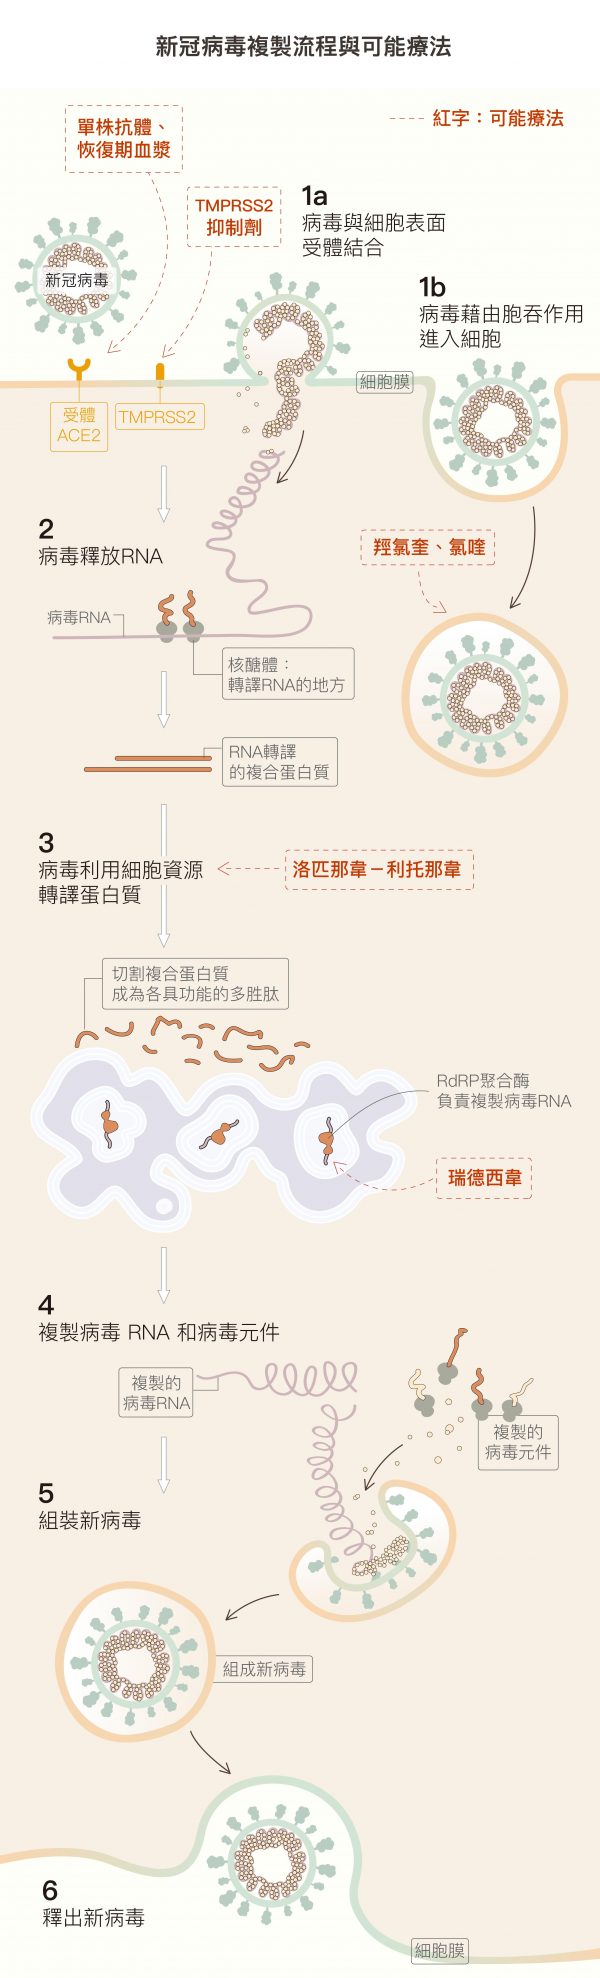 (1a)病毒棘蛋白與細胞表面受體 ACE2 結合，就像用鎖插入鑰匙開門，TMPRSS2 則會幫助病毒進入細胞。(1b)細胞膜凹陷形成囊泡，把病毒包裹起來，進入細胞。(2) 病毒進入細胞後會釋放遺傳物質 RNA ，並切斷 RNA 以利複製。(3) 病毒綁架細胞的蛋白質合成系統，製造病毒複製所需各種多胜肽。(4) 有些多胜肽負責複製病毒 RNA，有些複製病毒結構的「元件」。(5) 將複製完成的 RNA 與結構元件，組合成一個個新病毒 。(6) 新病毒離開宿主細胞。圖│研之有物 (資料來源│謝興邦)